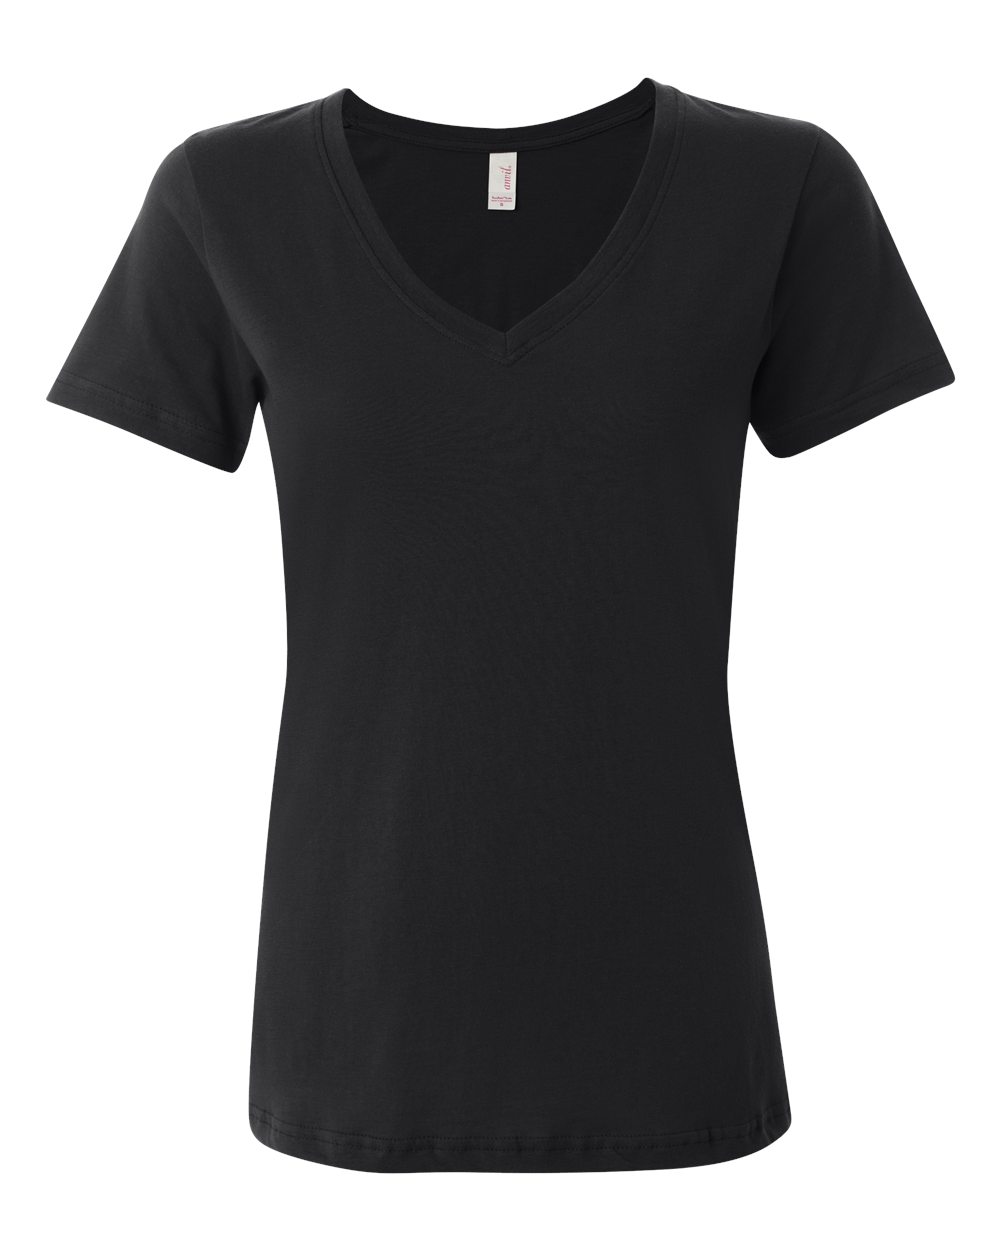 Anvil 392 Ladies' Sheer V-Neck T-Shirt $7.52